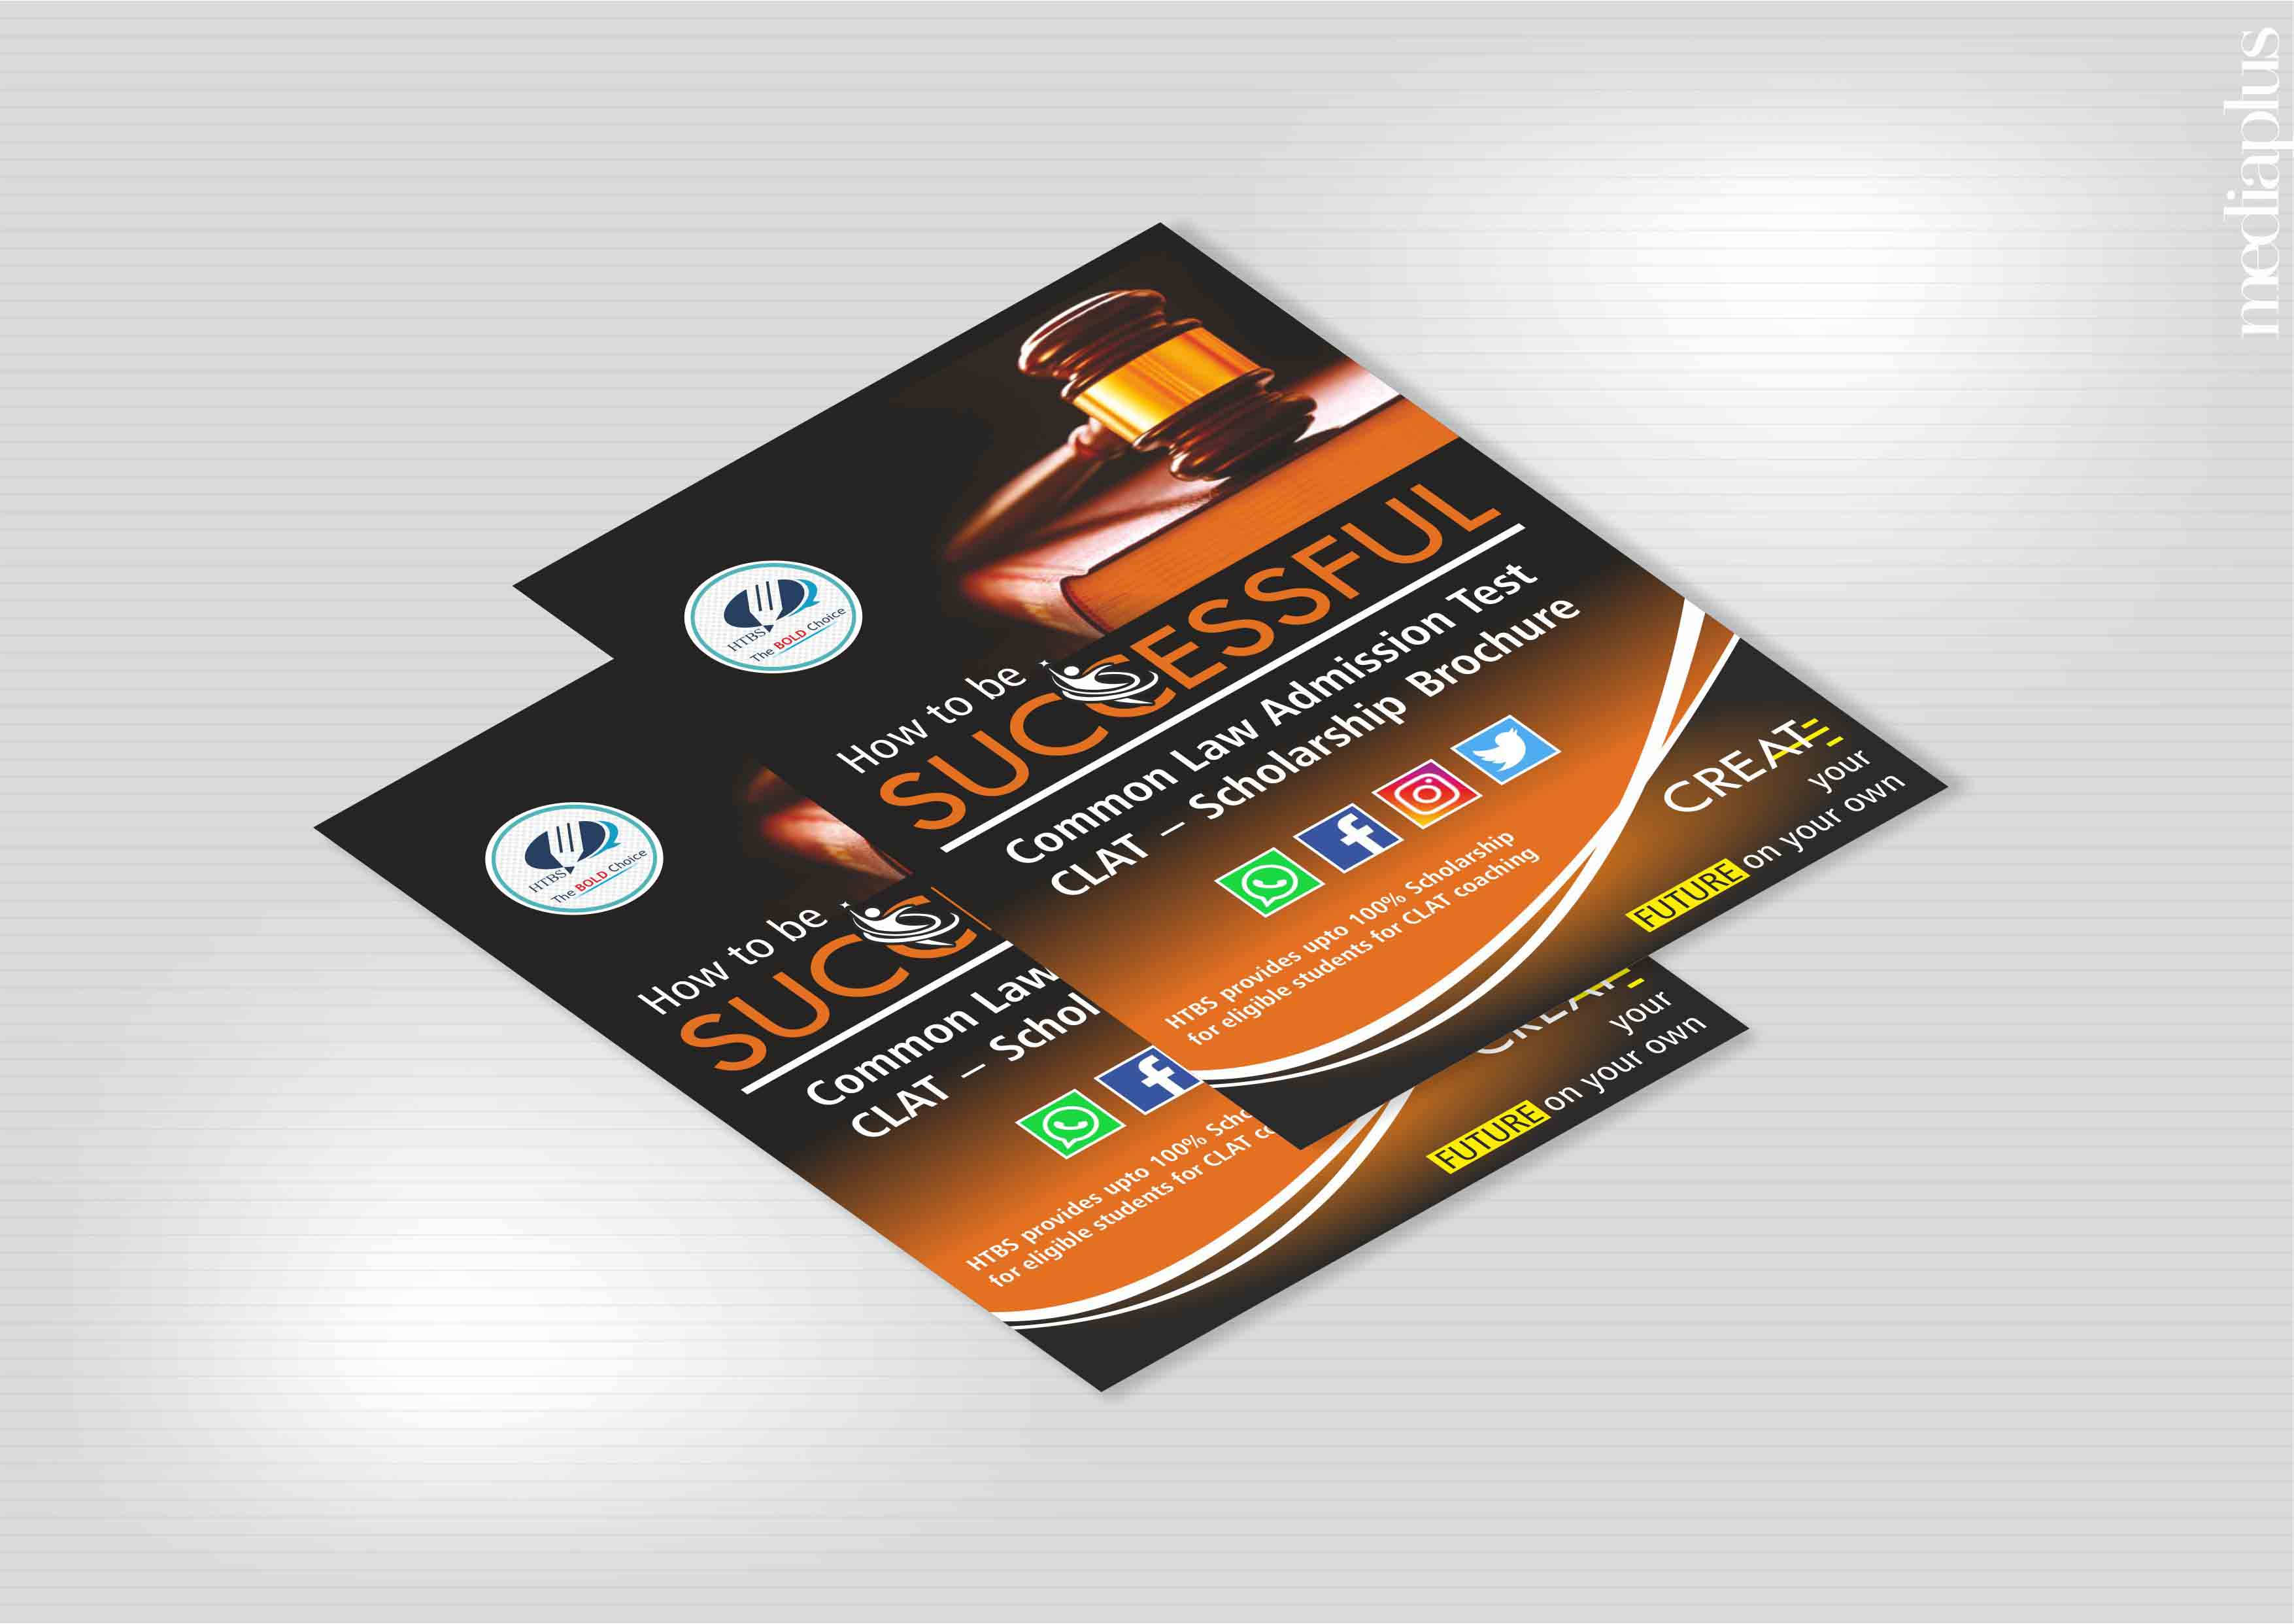 Flyer Design Print Advertising by Media Plus in Hyderabad